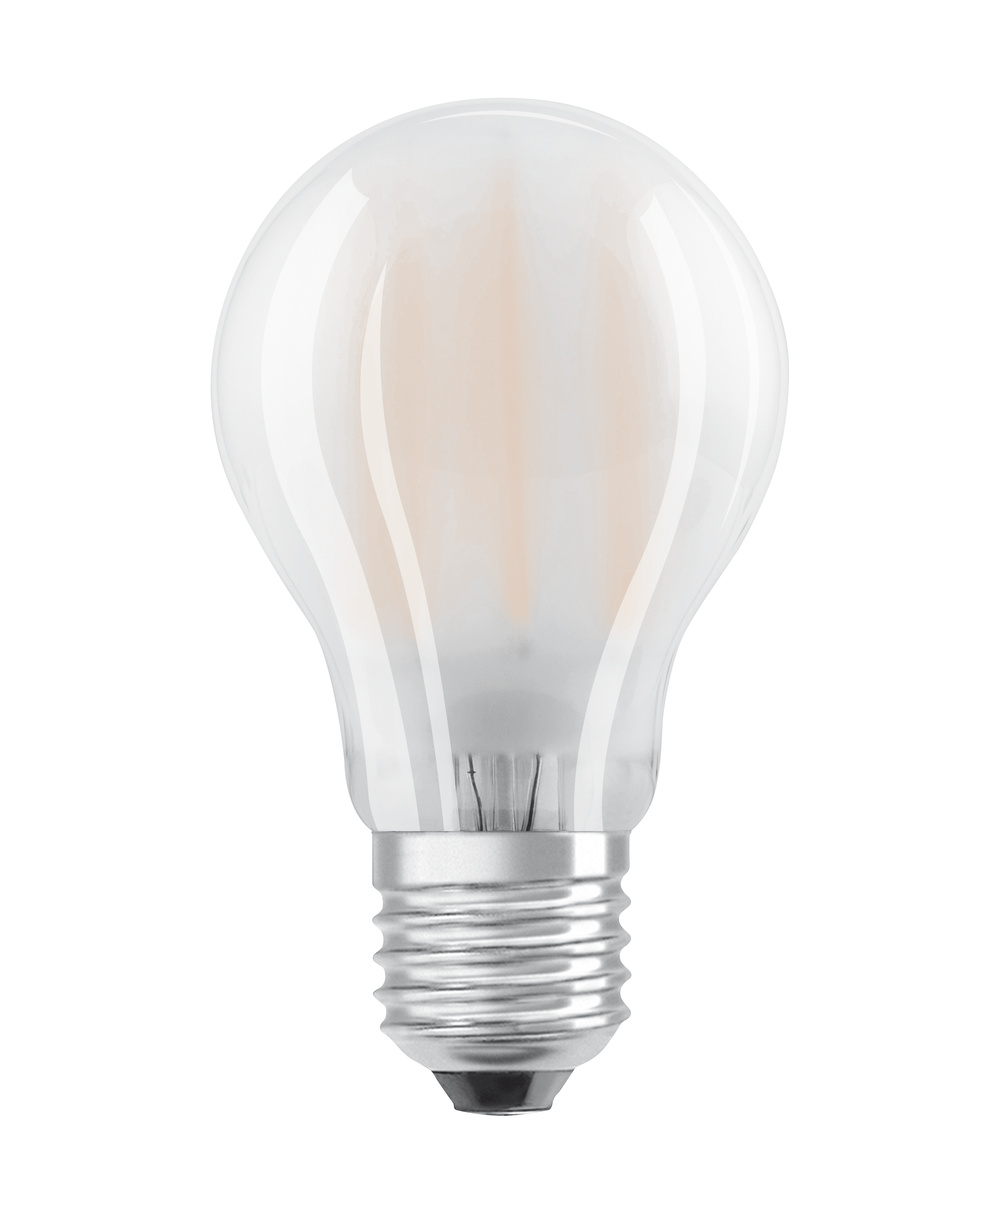 Ledvance LED-Leuchtmittel SMART+ WiFi Filament Classic Dimmable 75  7.5 W/2700 K E27  - 4058075609716